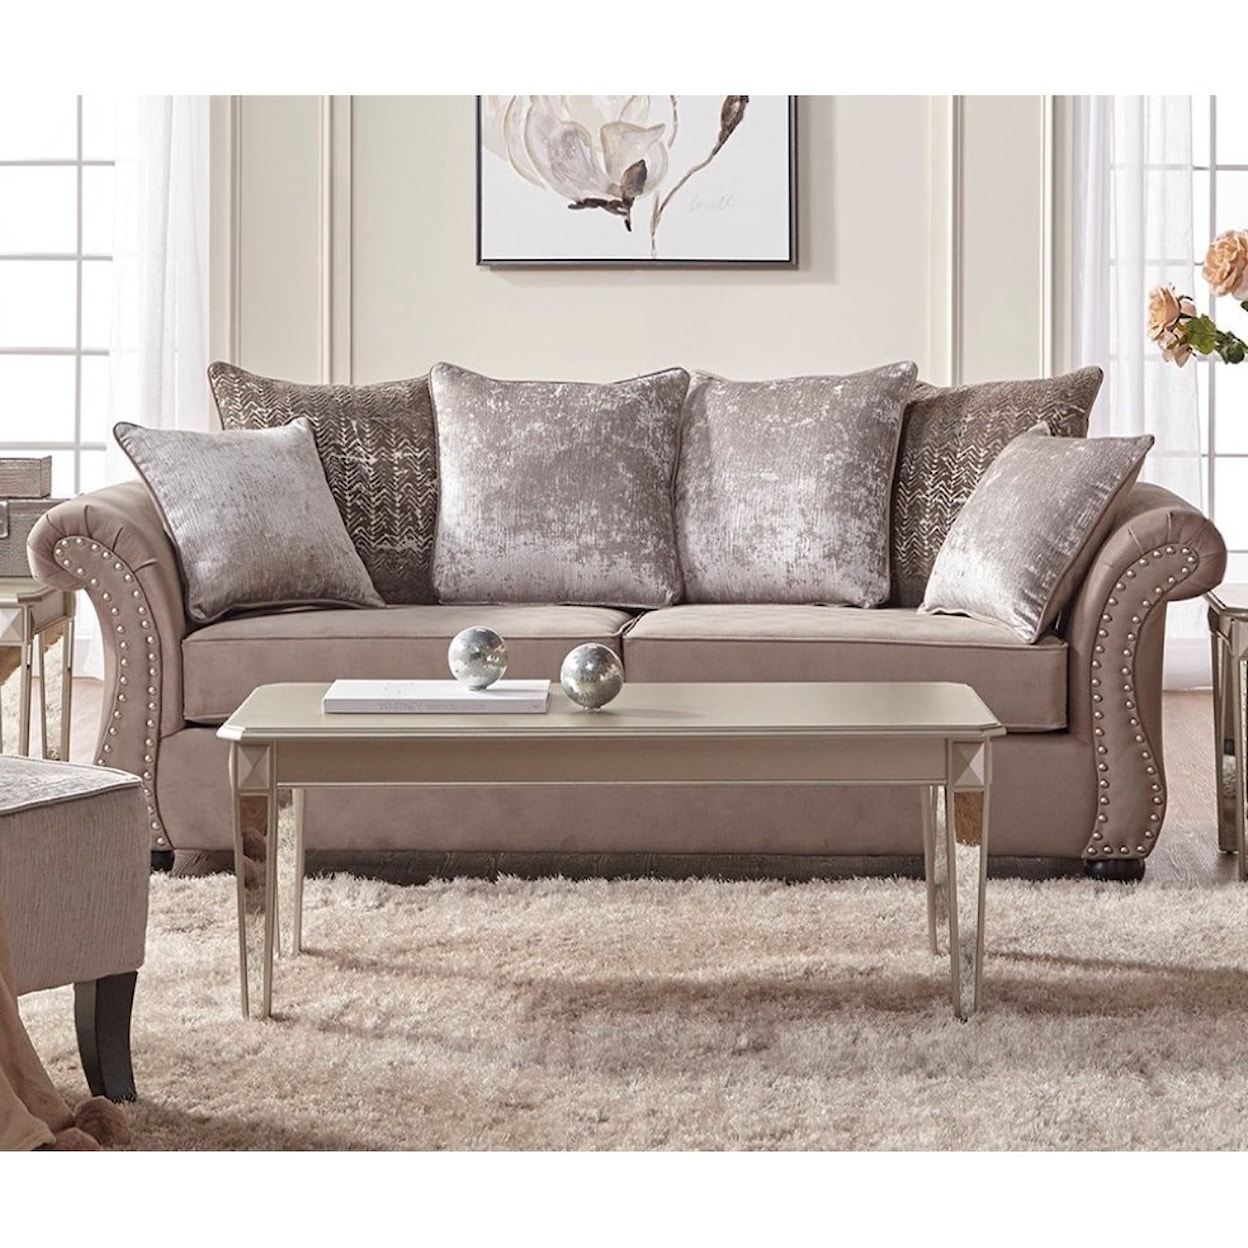 Serta Upholstery by Hughes Furniture 7500 Stationary Sofa